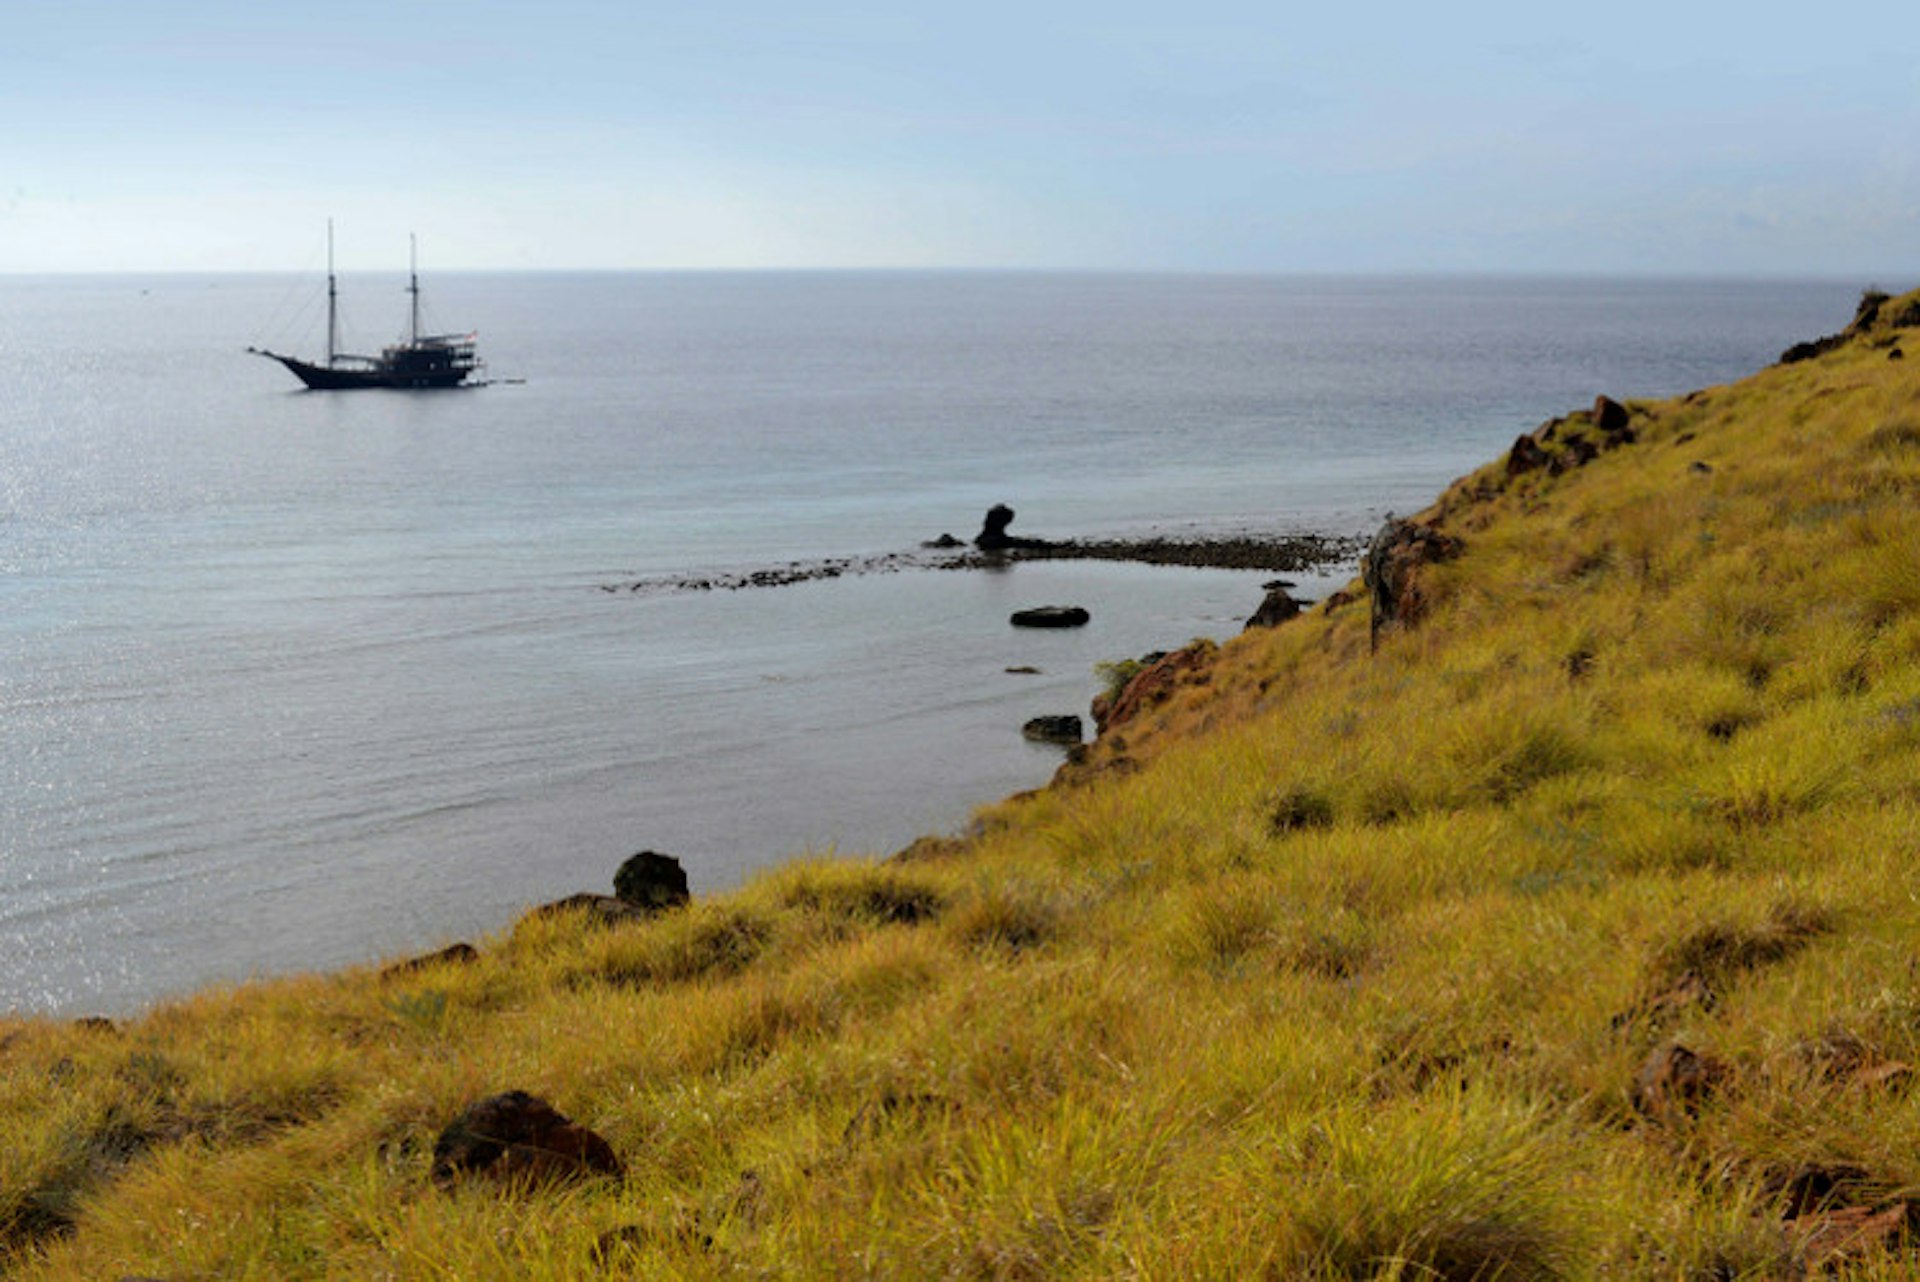 Dunia Baru anchored off a Komodo Island Islet. Image by Mark Eveleigh